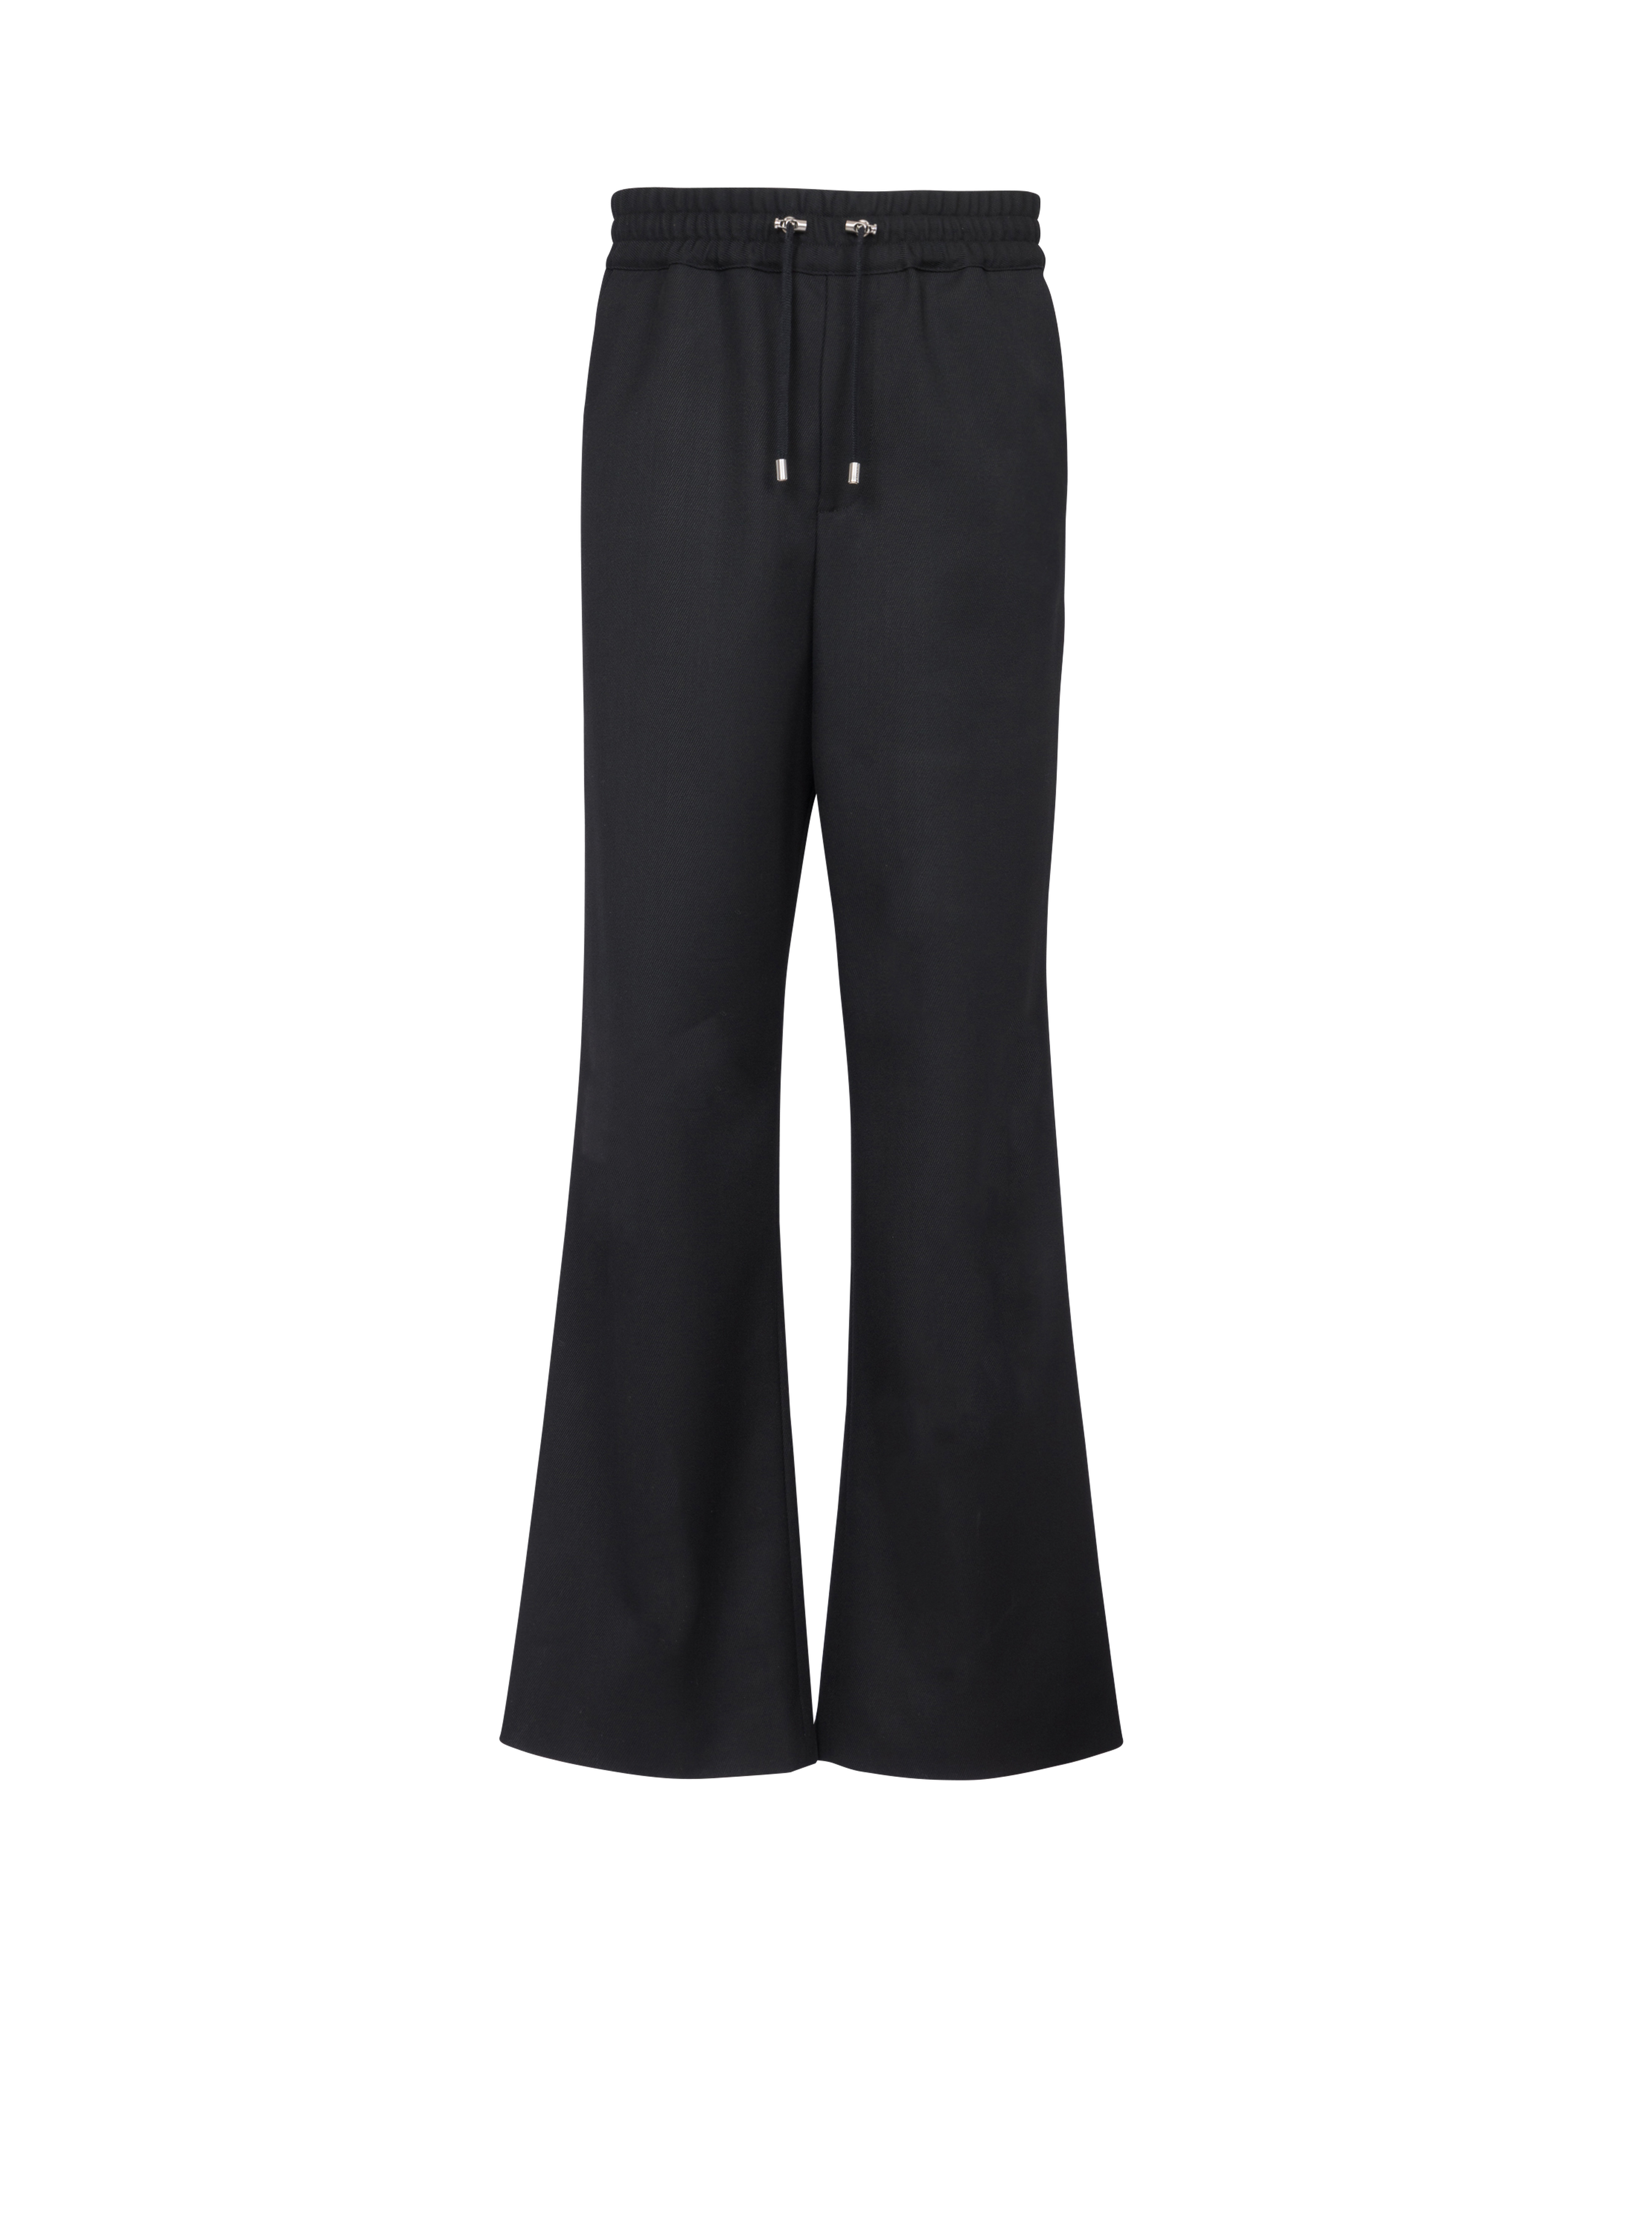 Pantaloni stile pigiama in lana, nero